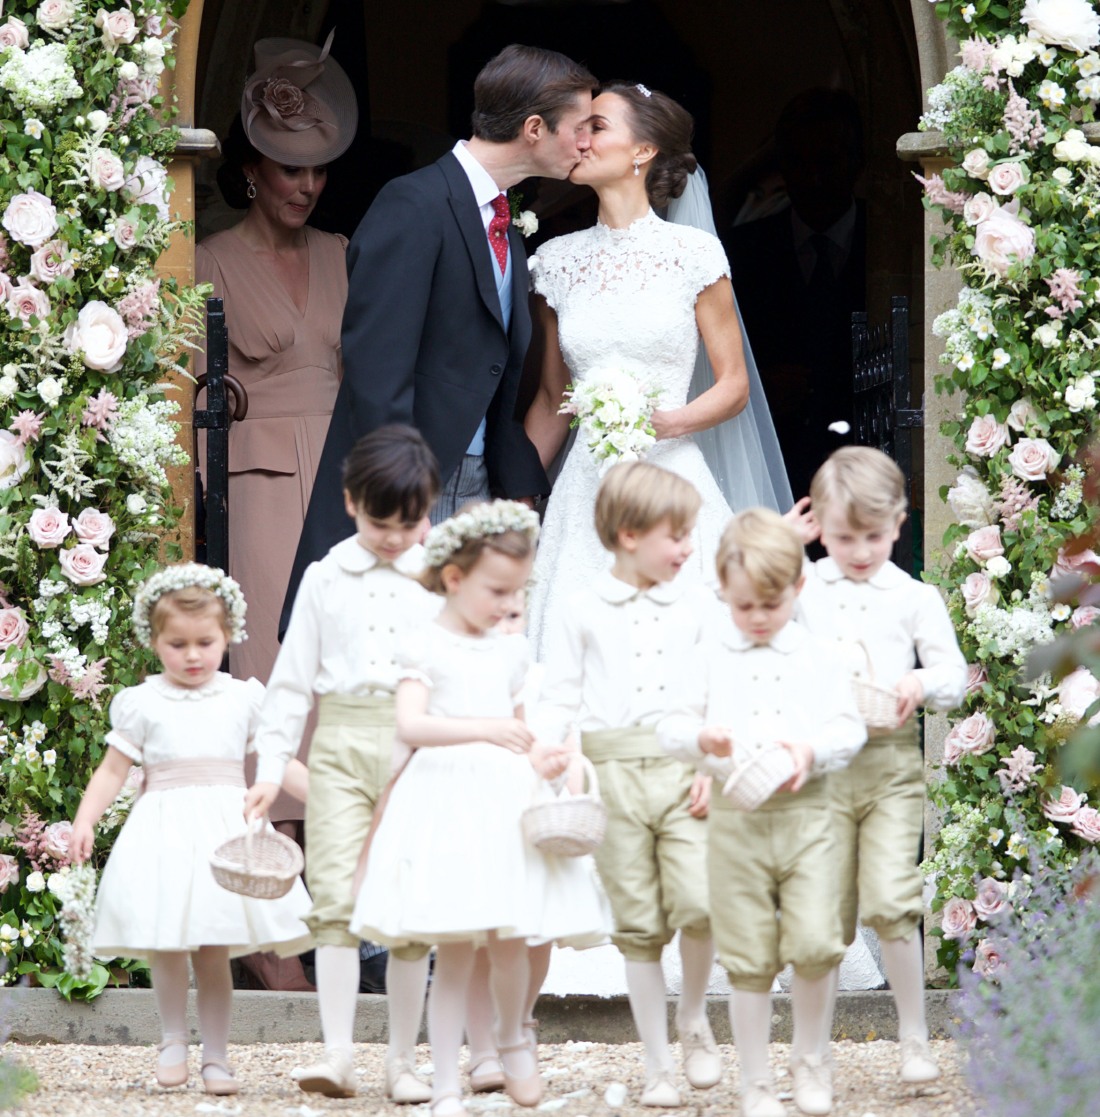 The wedding of Pippa Middleton and James Matthews